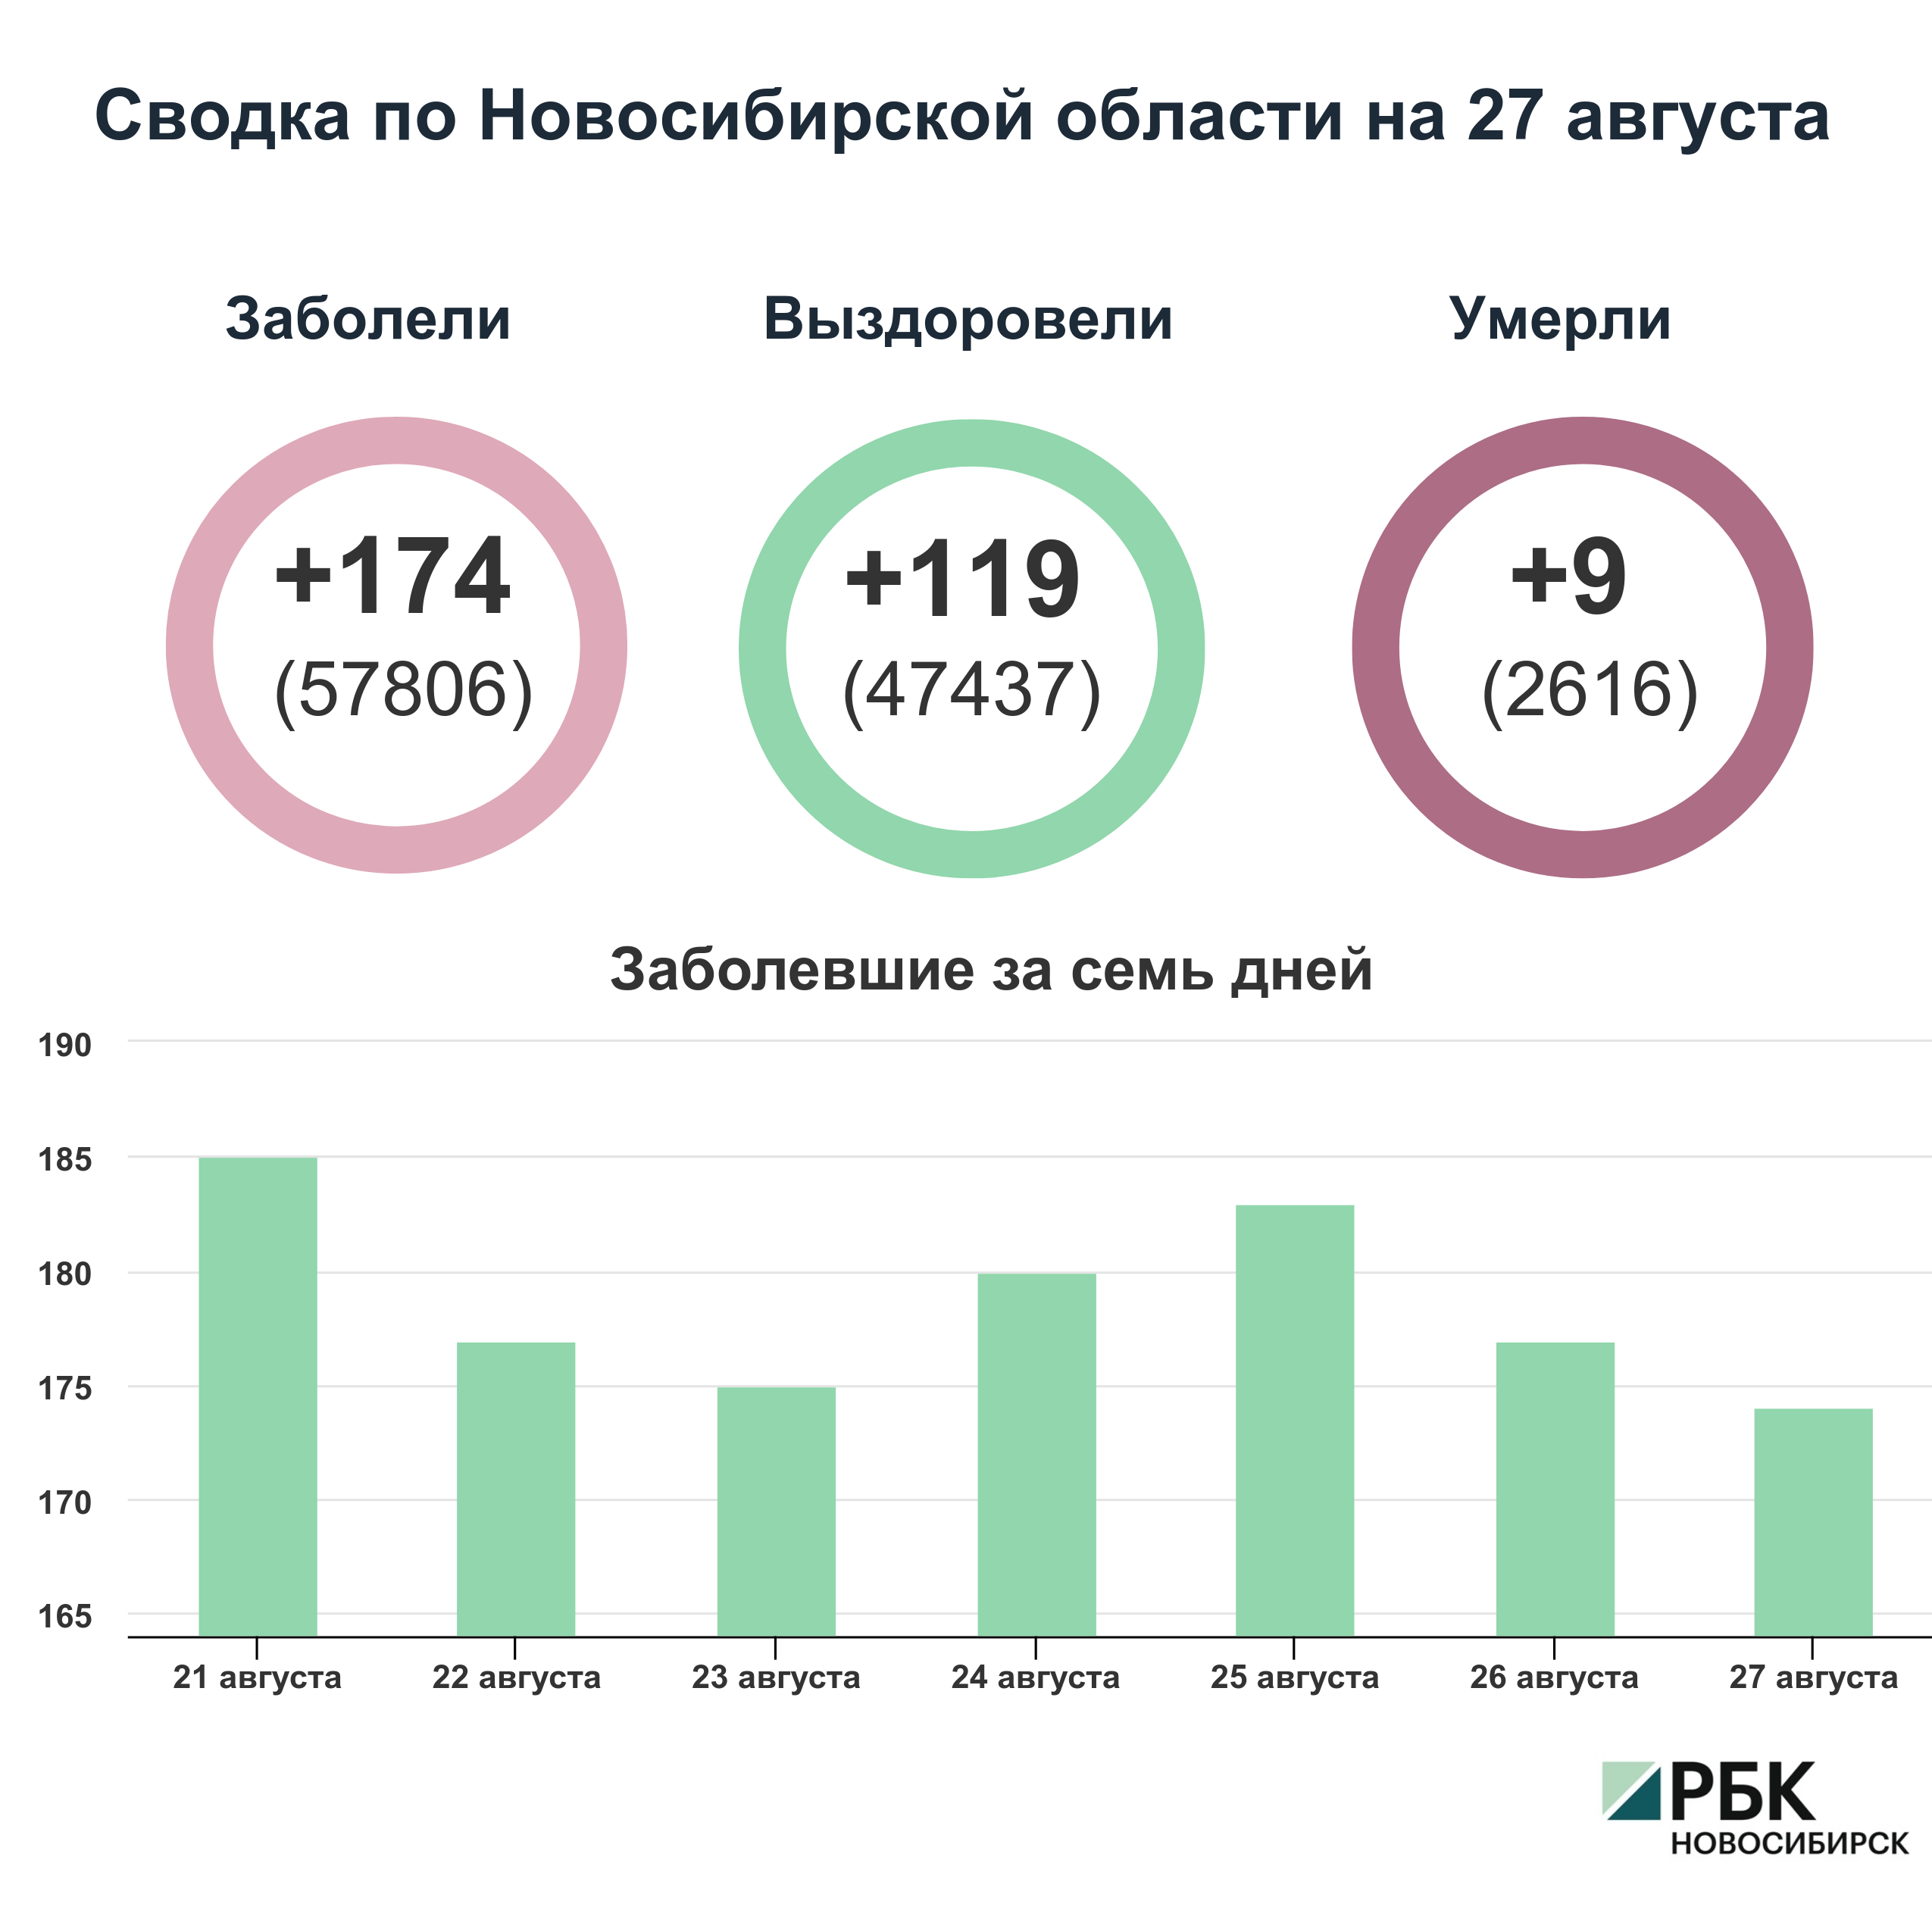 Коронавирус в Новосибирске: сводка на 27 августа